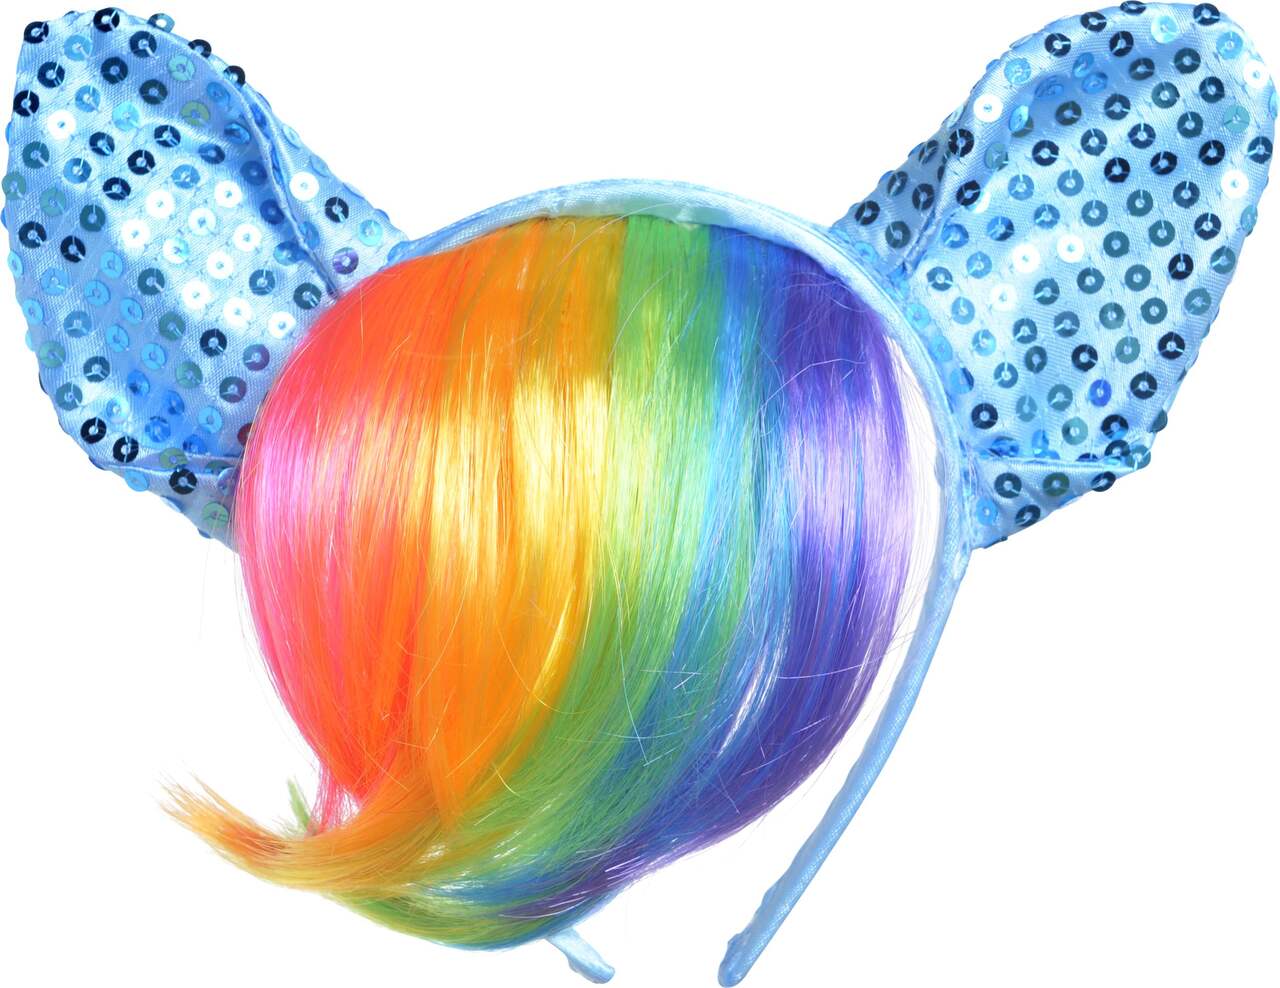 Rainbow Dash My Little Pony Costume for Infants